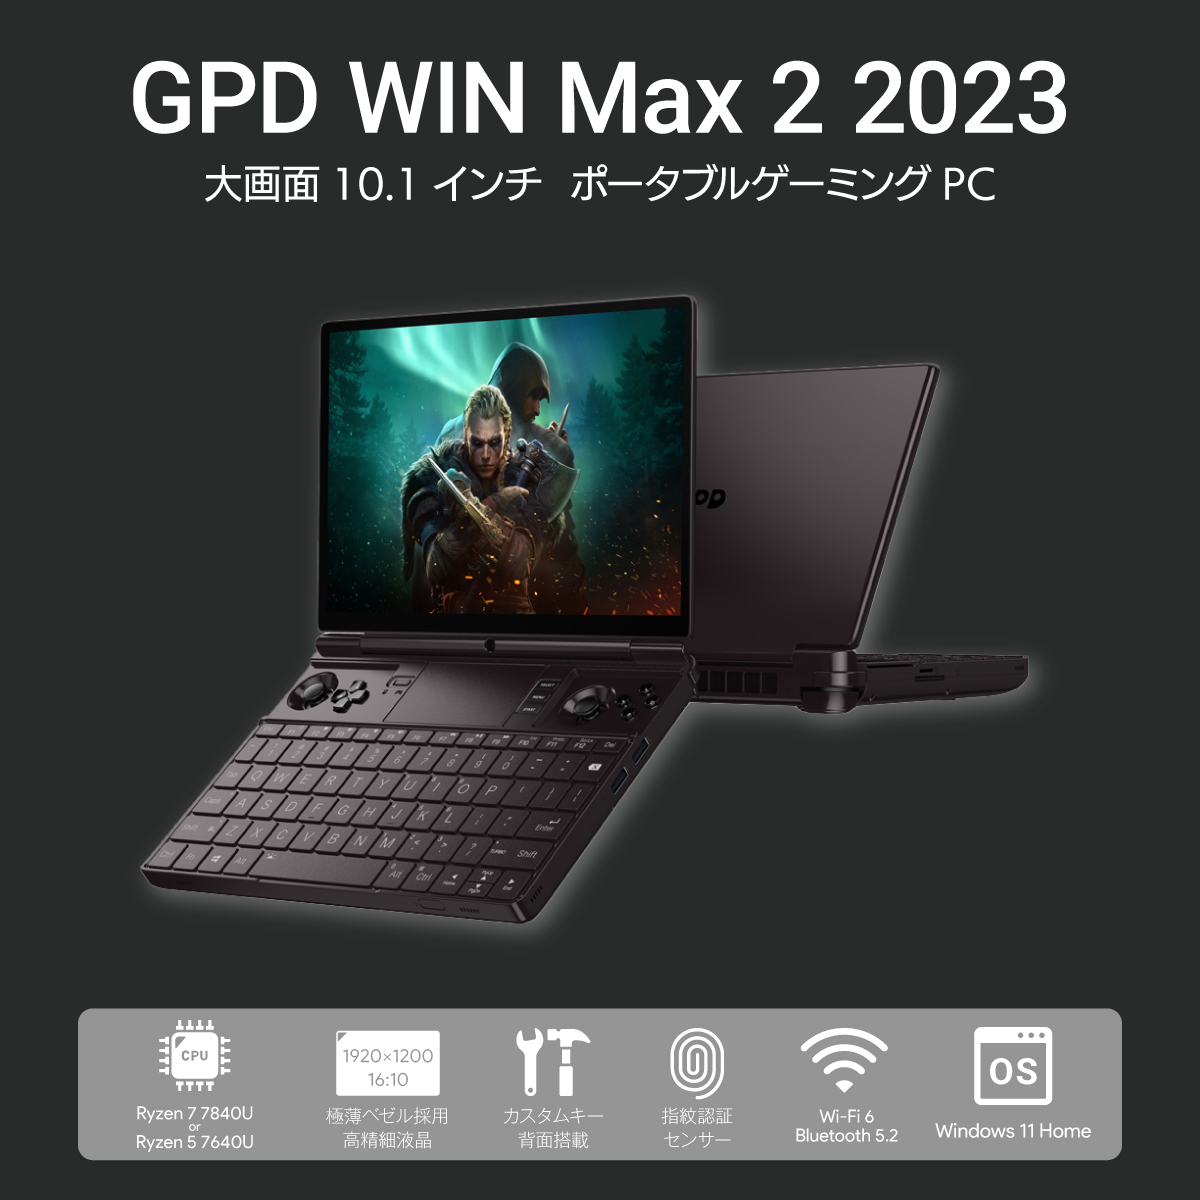 GPD WIN MAX 2 2023 | 株式会社リンクスインターナショナル